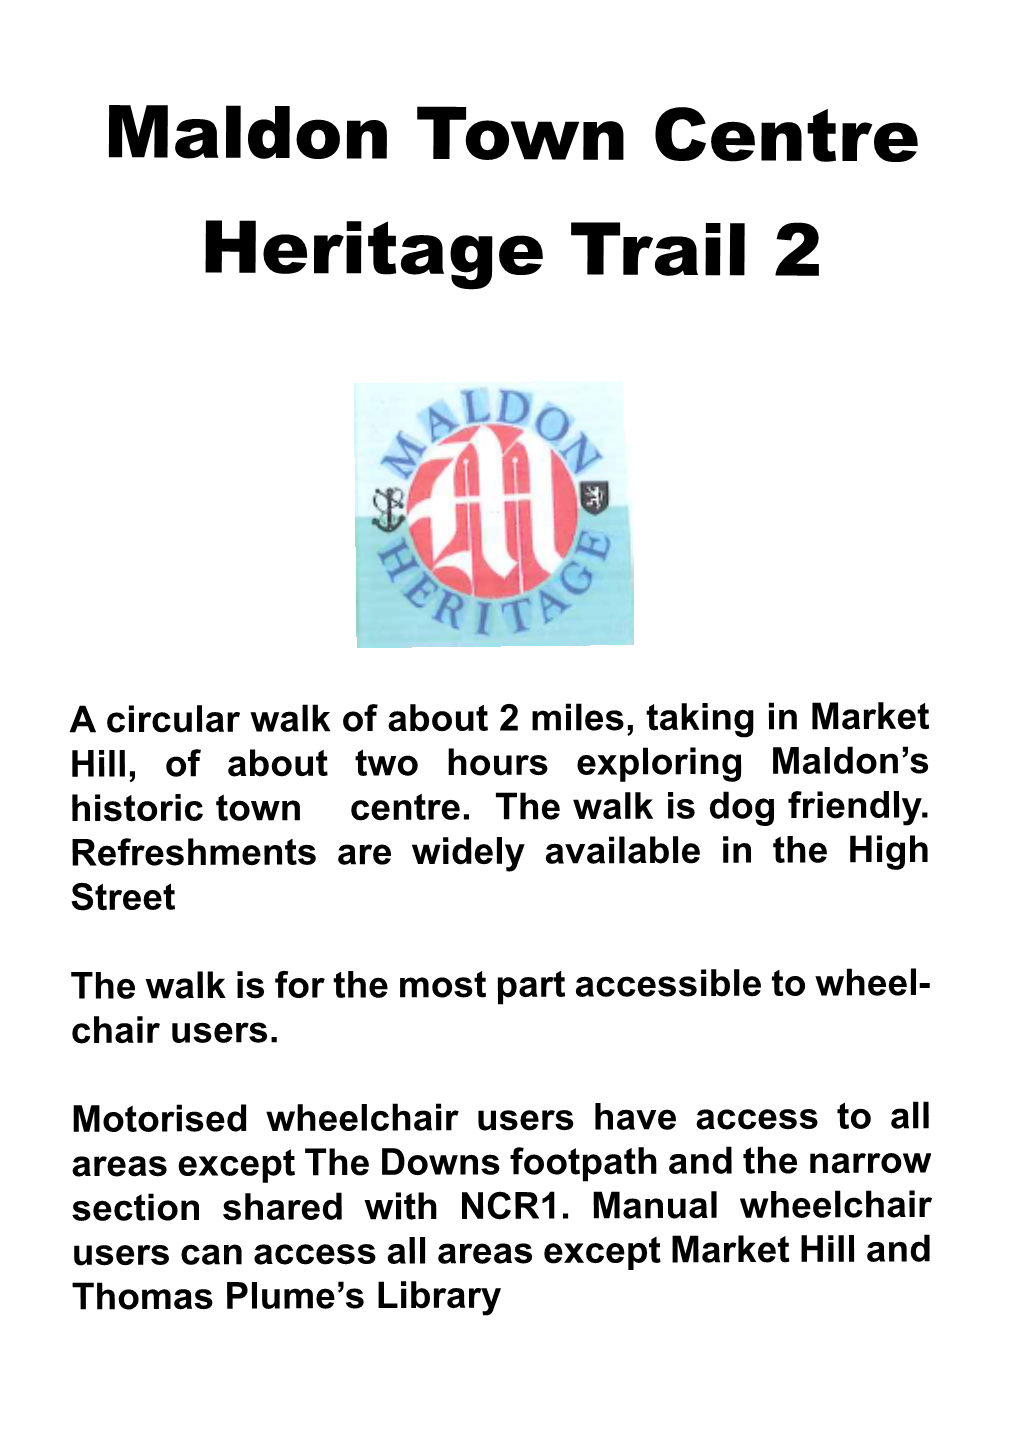 Maldon Town Centre's Heritage Trail 2